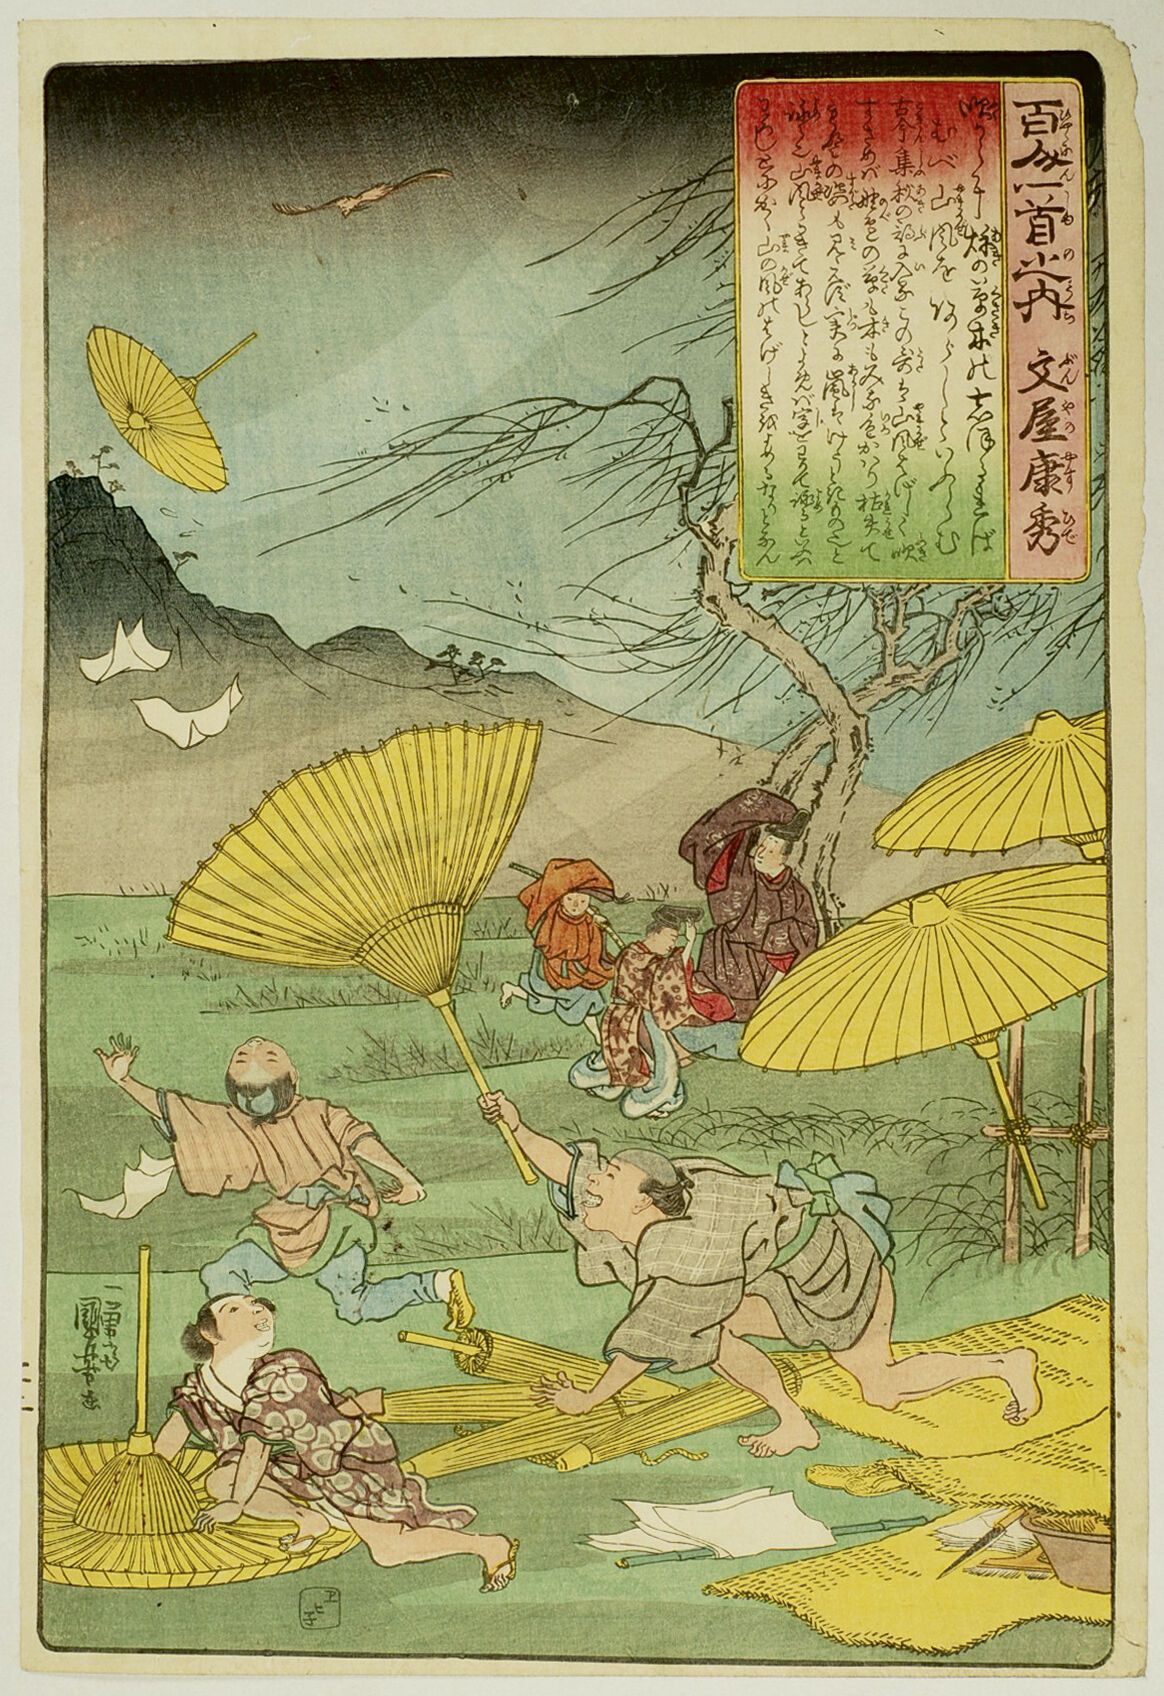 Null 宇都宫邦彦 (1797-1861)
百人一首》系列中的 "Oban tate-e"，板块为 "Bunya no Yasuhide"，卖伞人的店铺被风吹&hellip;